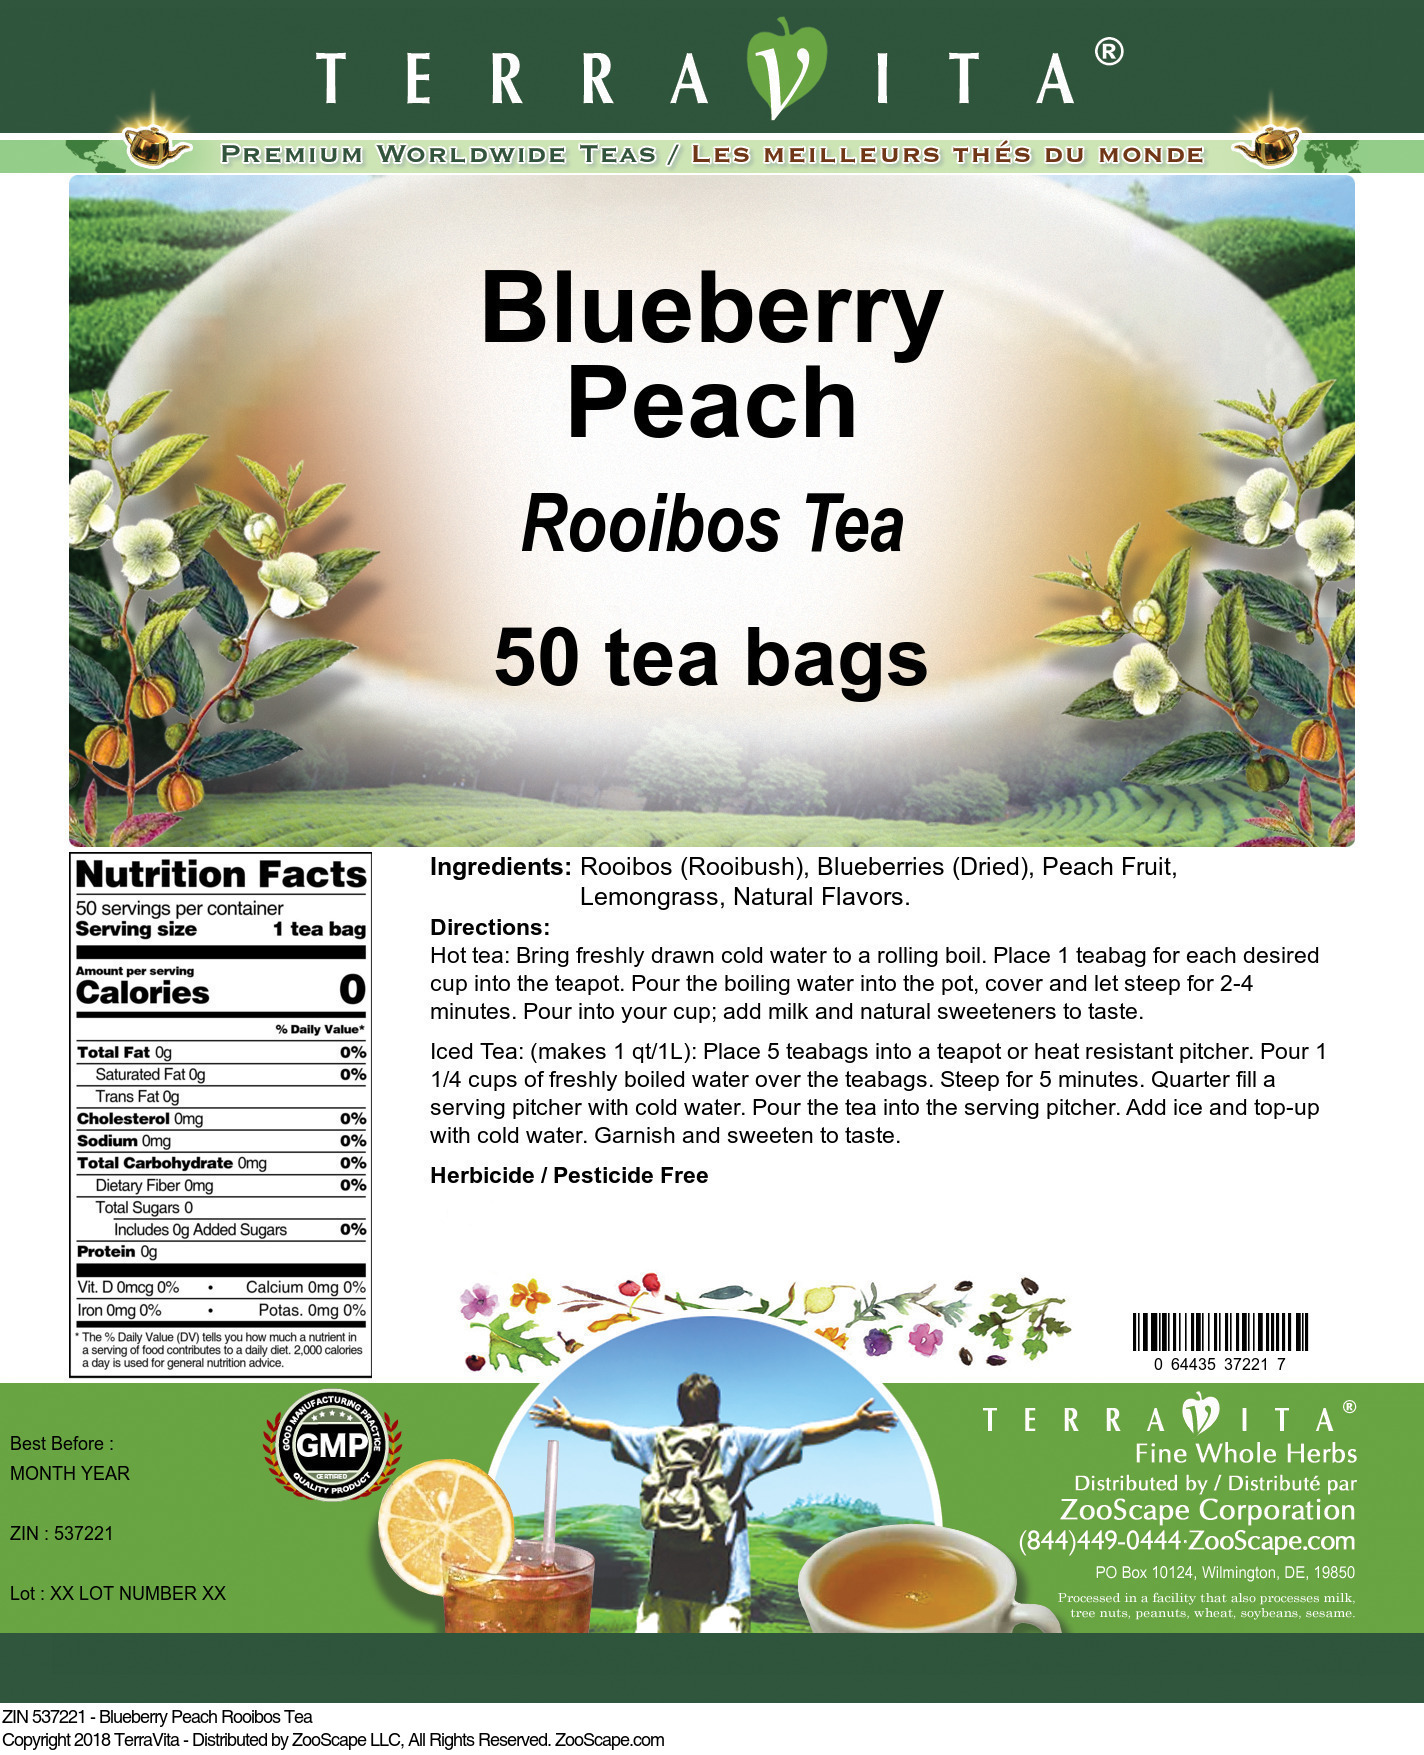 Blueberry Peach Rooibos Tea - Label